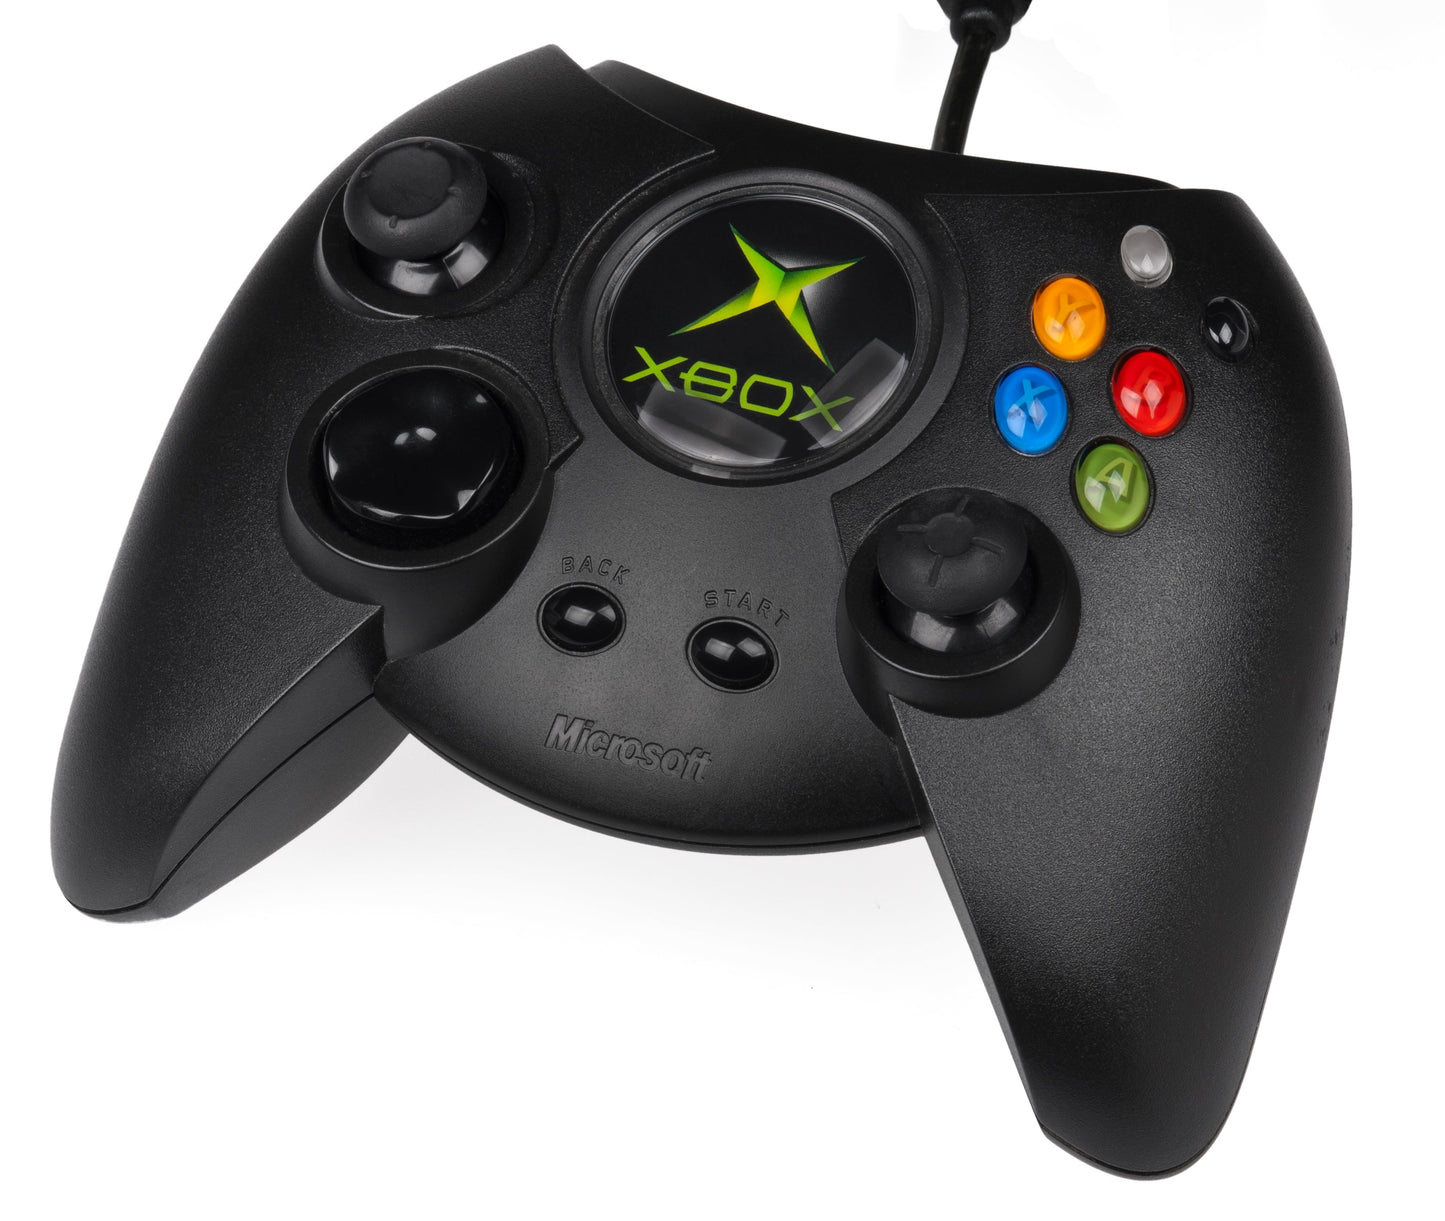 Original Xbox Controller - The Duke (Fat)